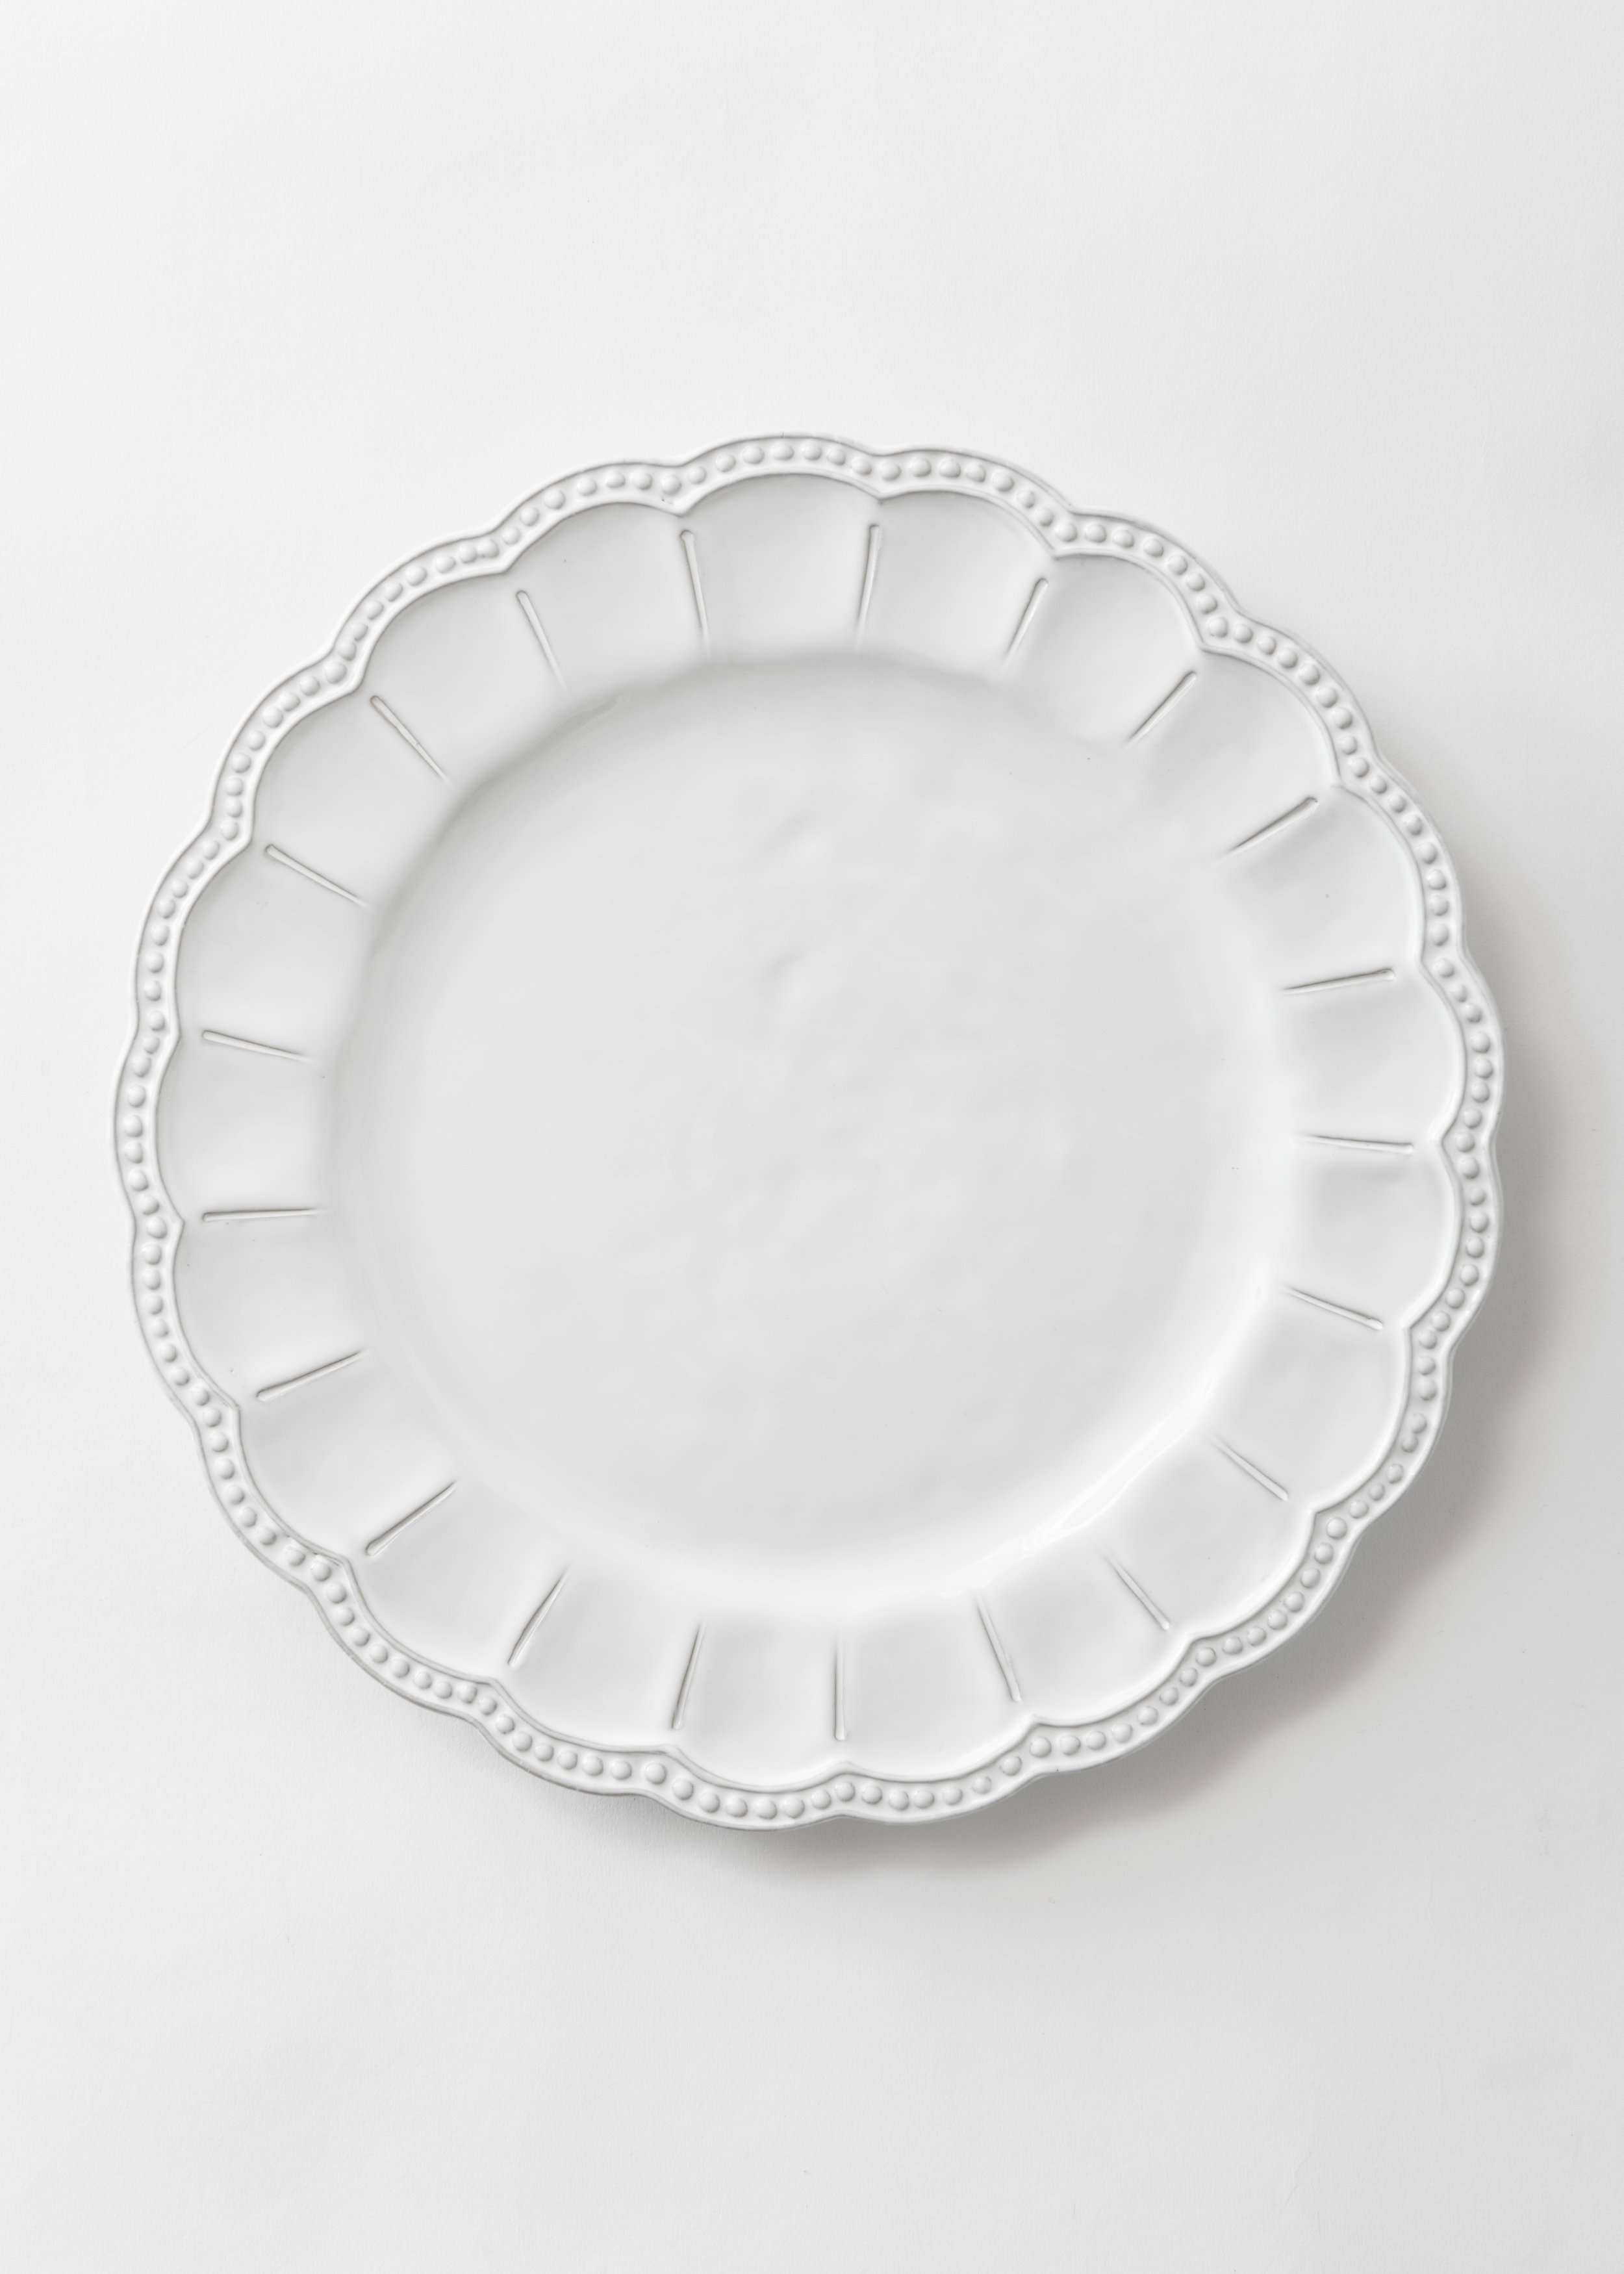 Белые блюда. Белая тарелка. Тарелки белые рельефные. Тарелка для нарезки белая. Тарелки белые керамика.